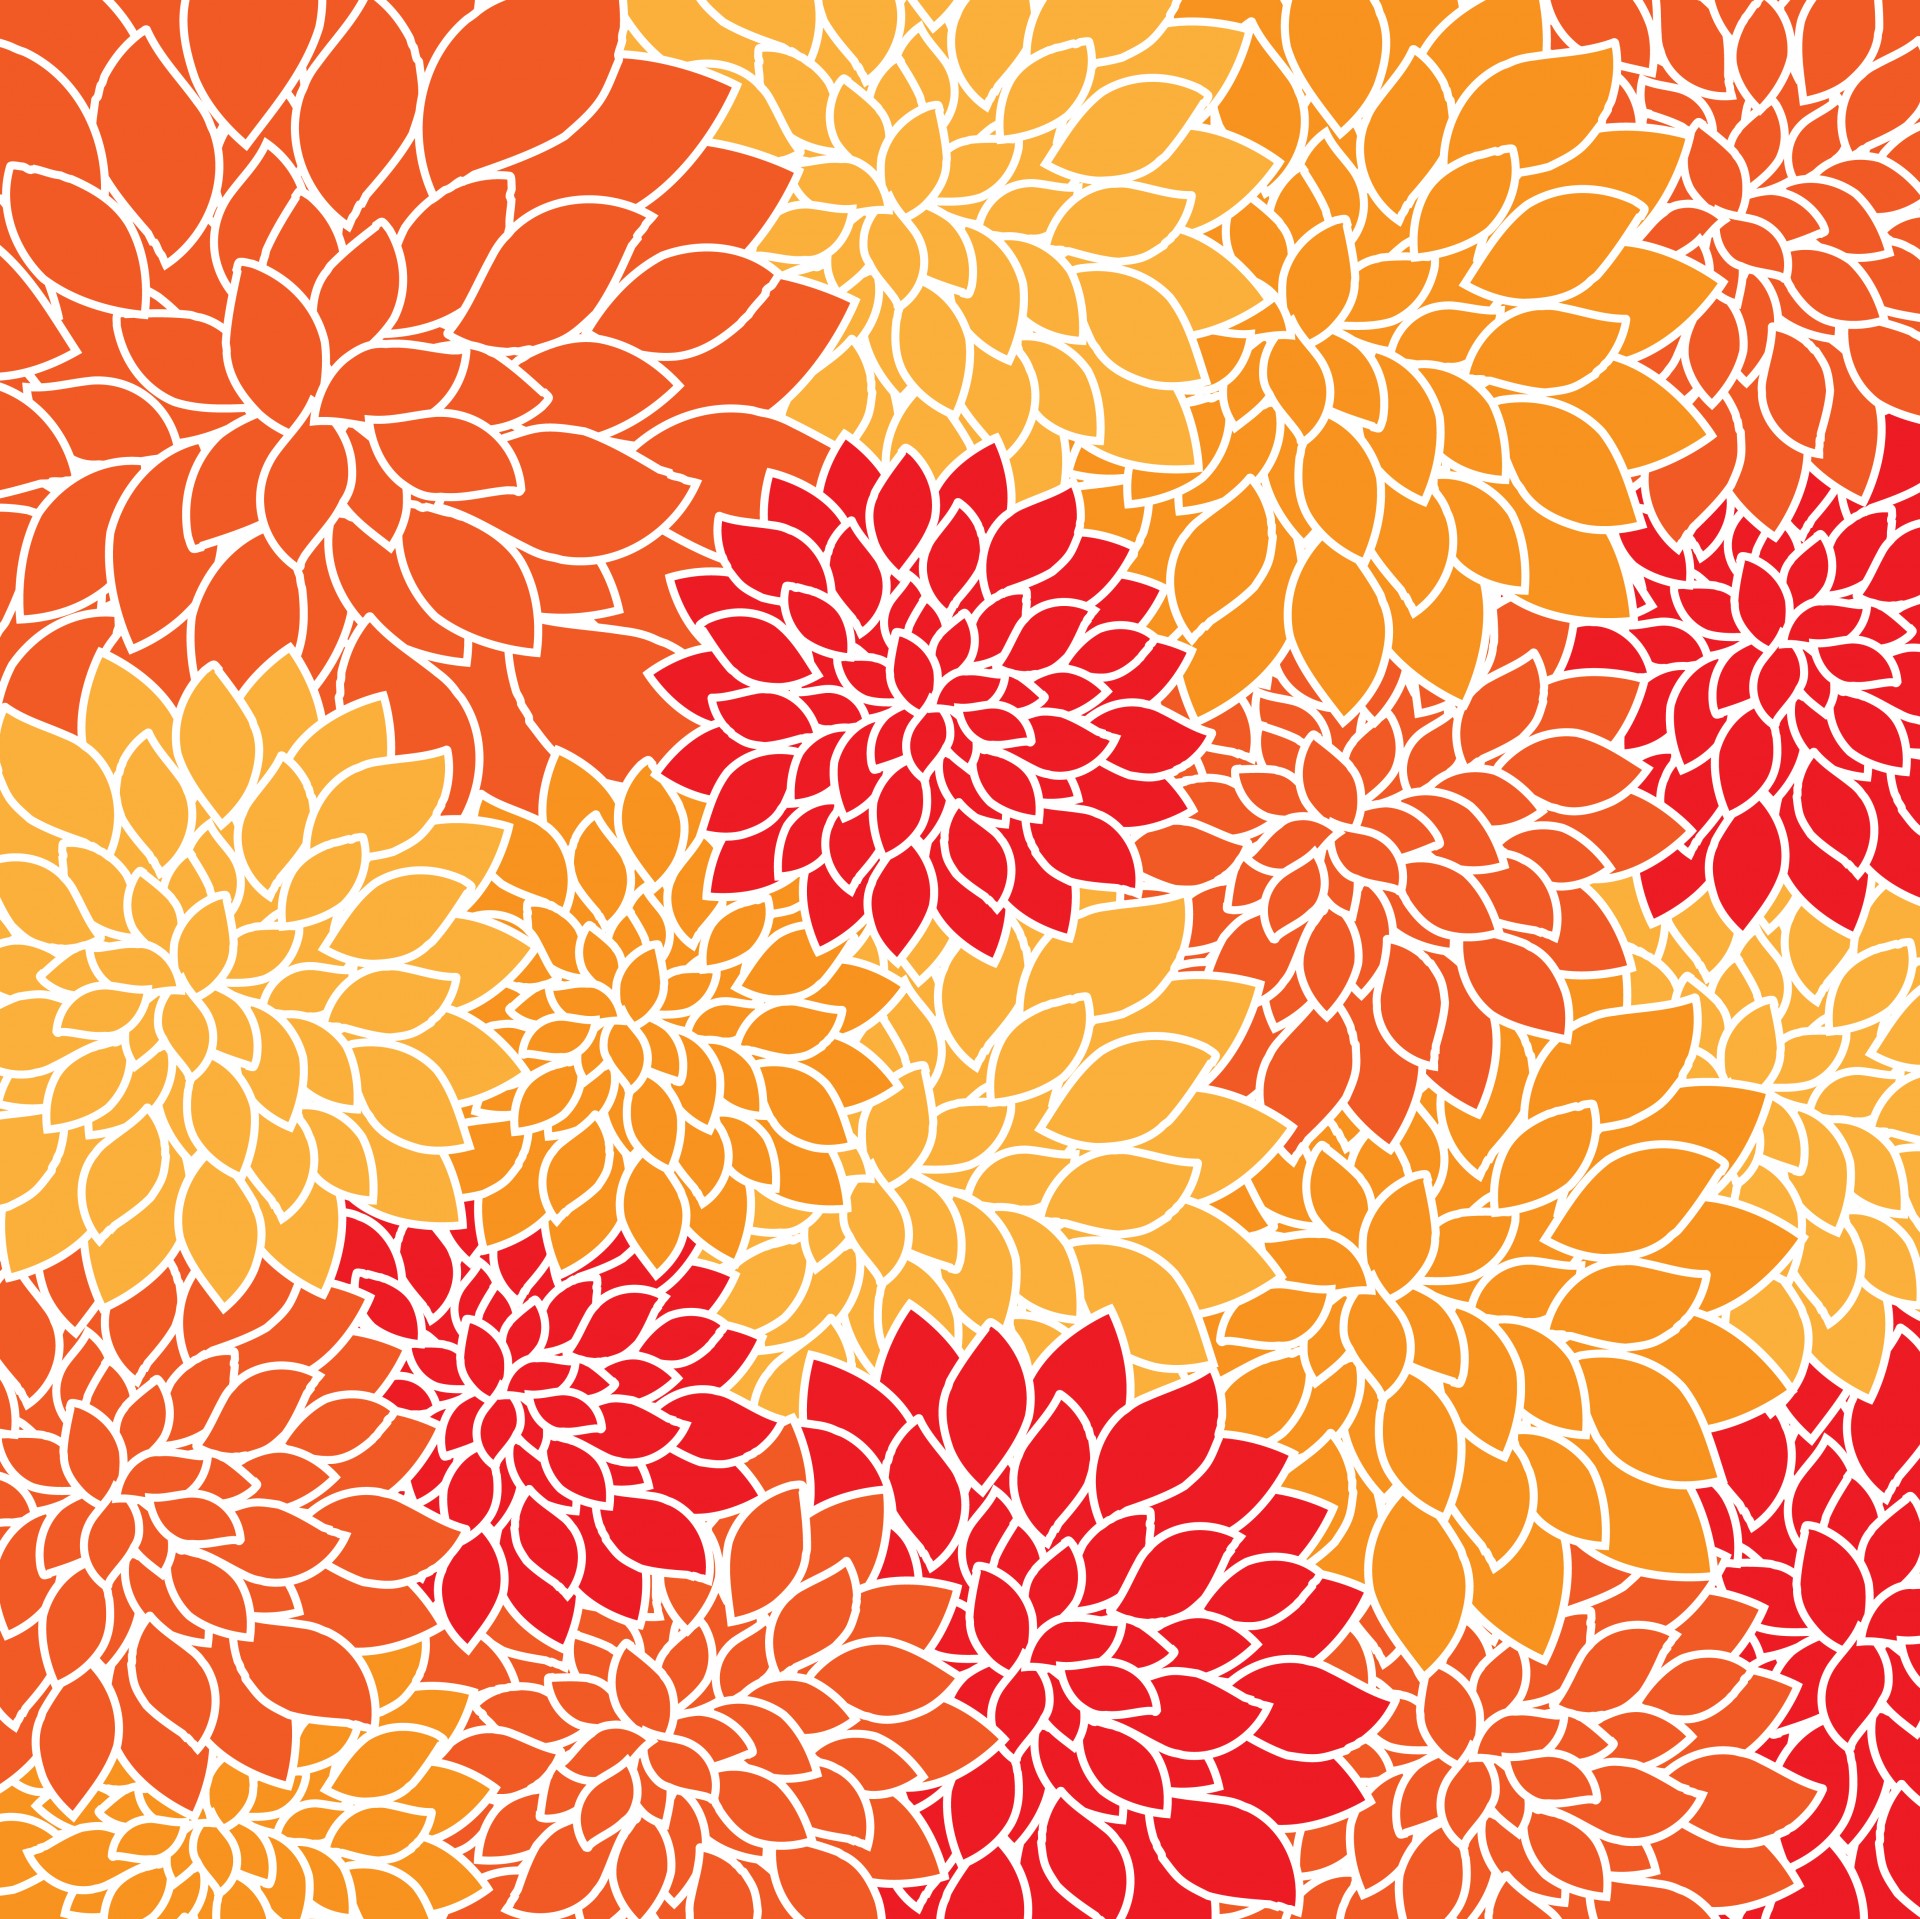 Vintage floral shades of orange, red dahlia flowers wallpaper pattern background